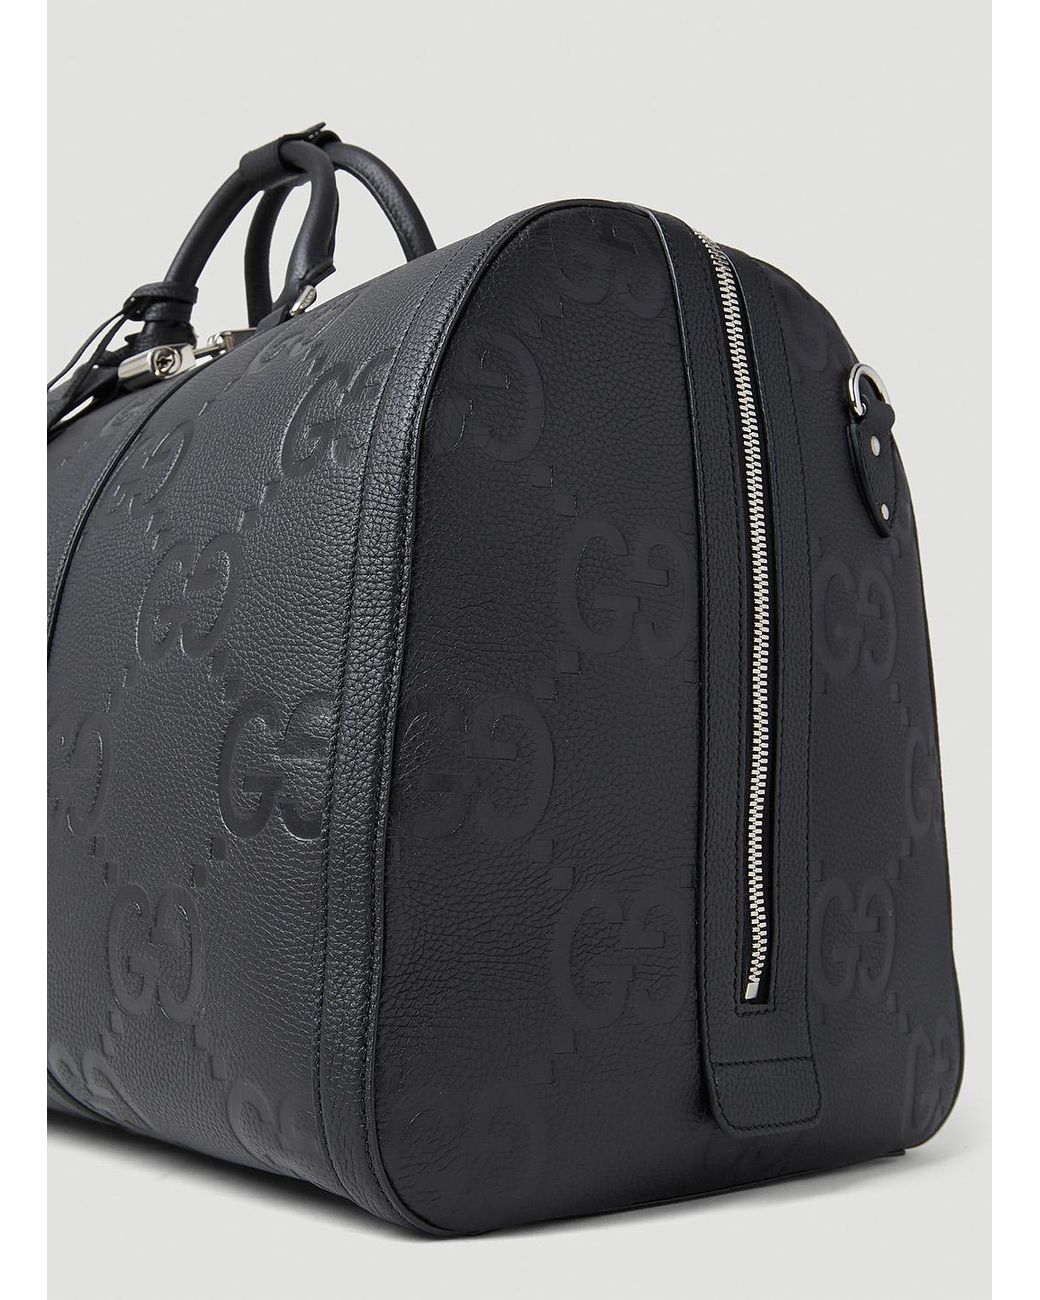 Jumbo GG large duffle bag in black leather